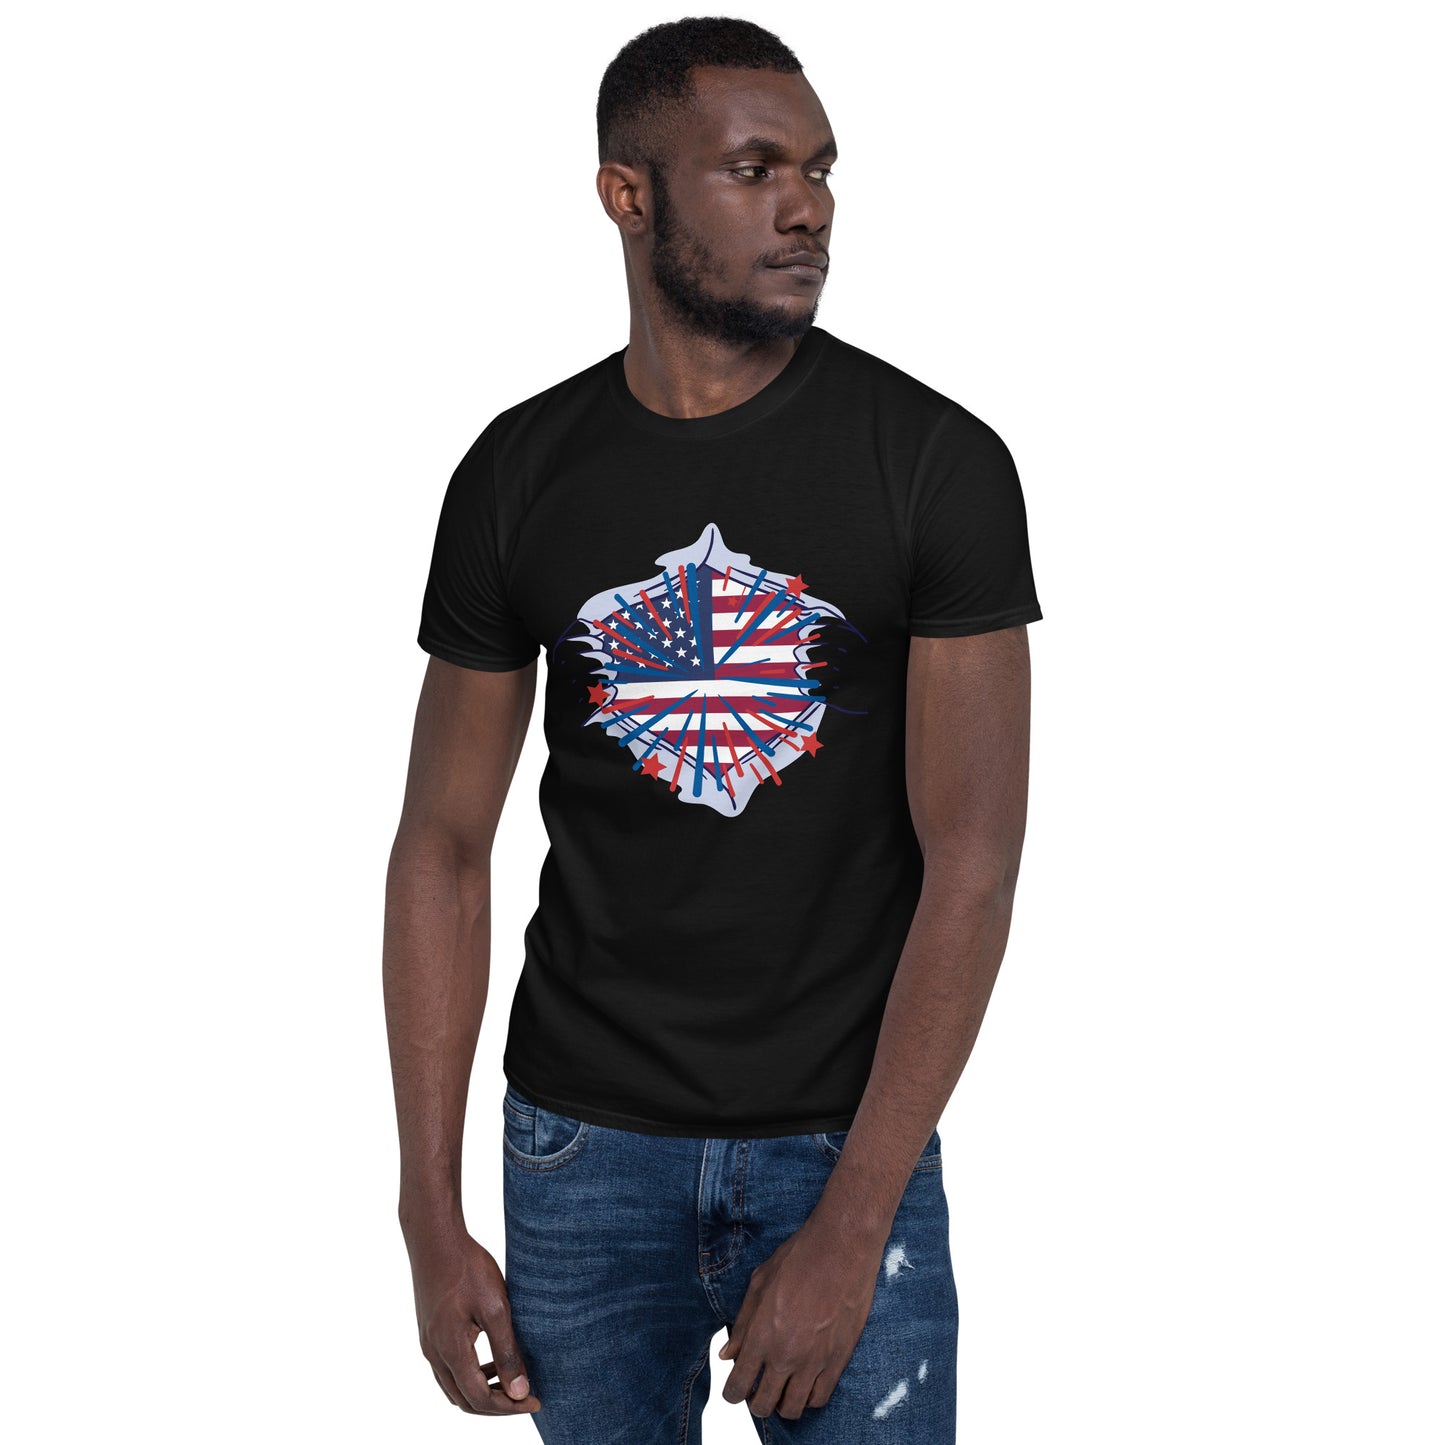 USA Unisex T-Shirt